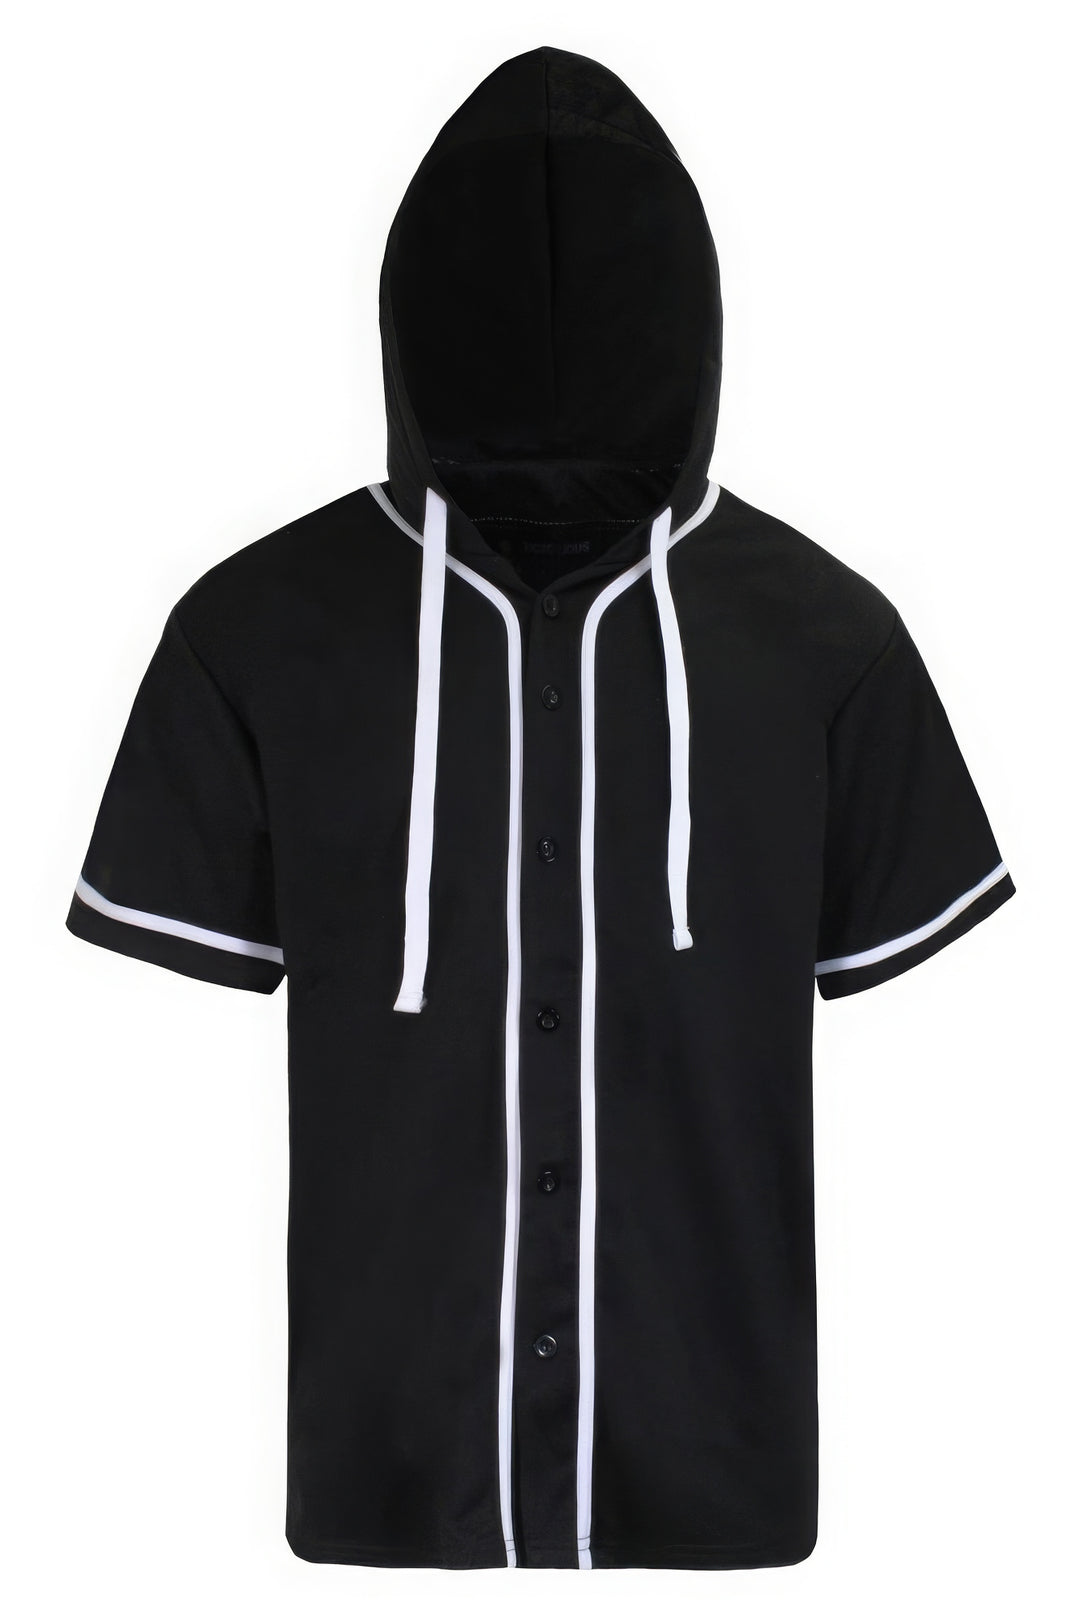 Hooded Baseball Jersey - bertofonsi